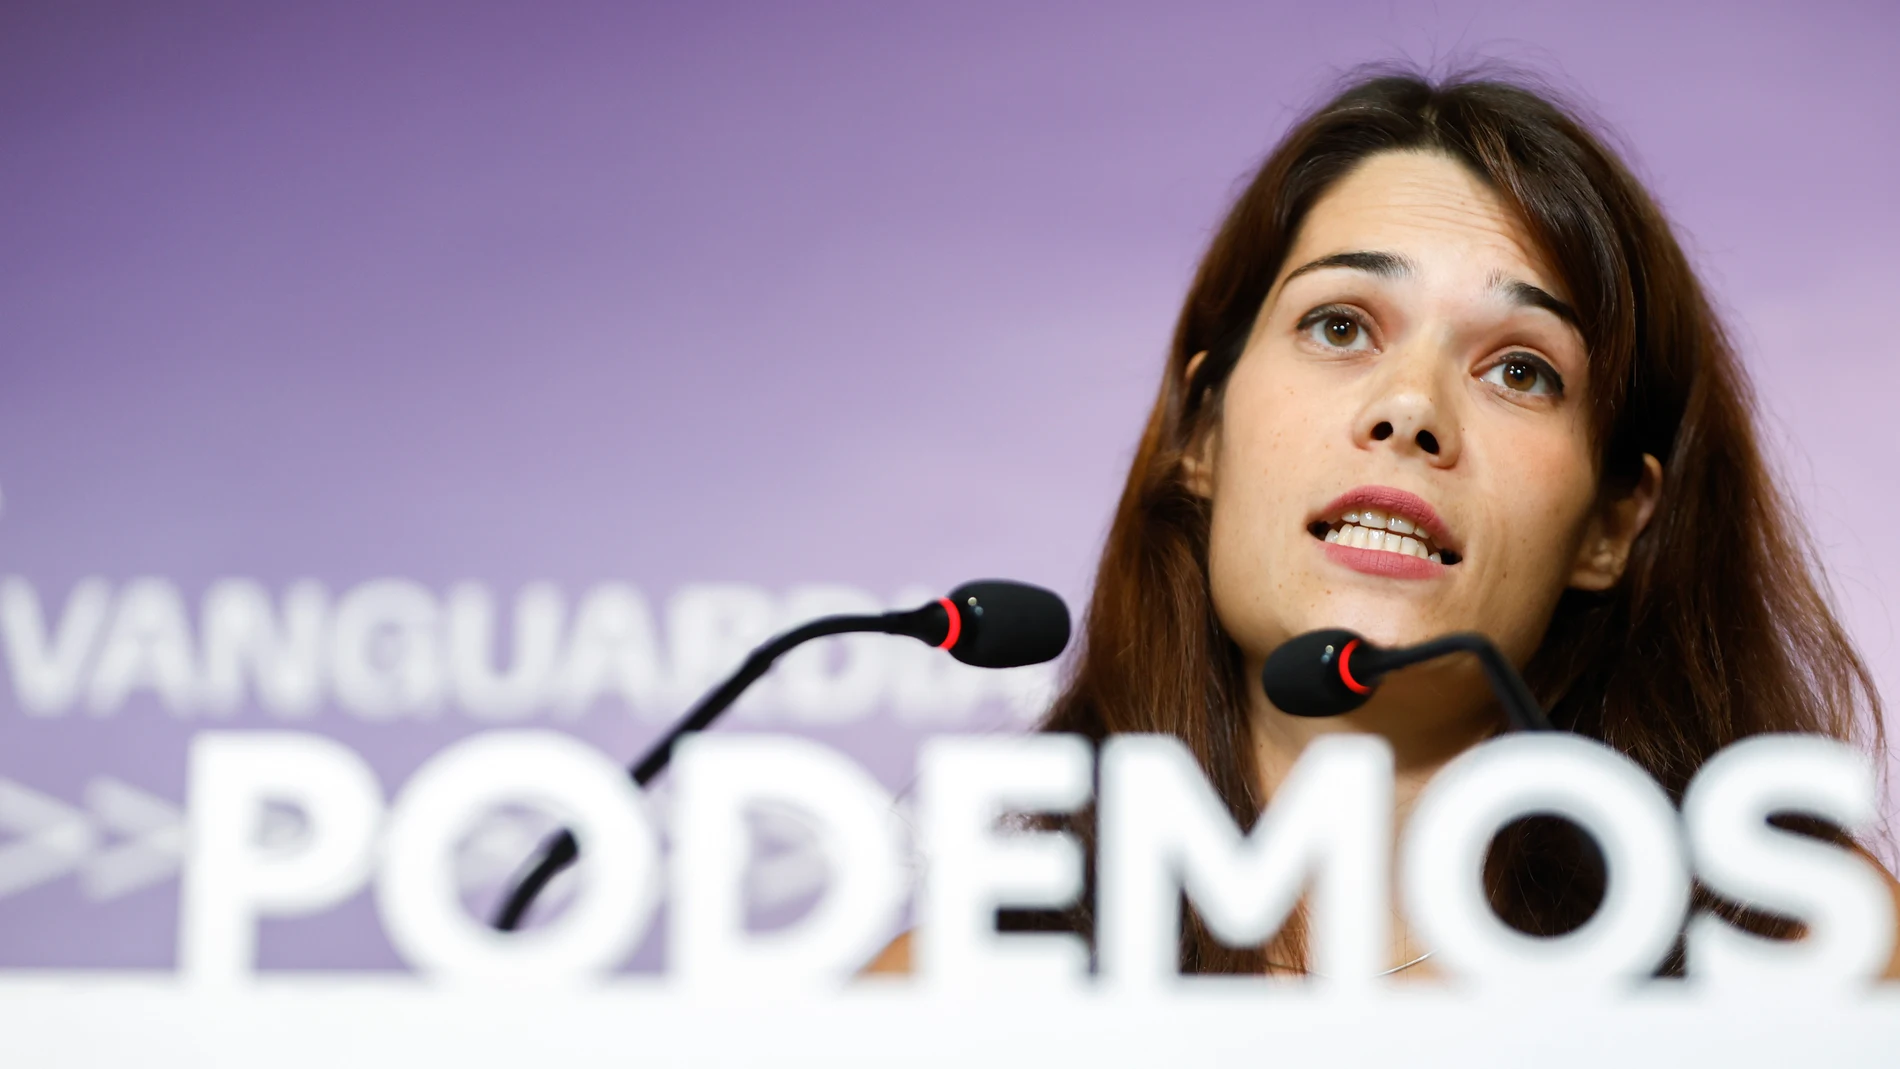  La coportavoz de Podemos, Isa Serra